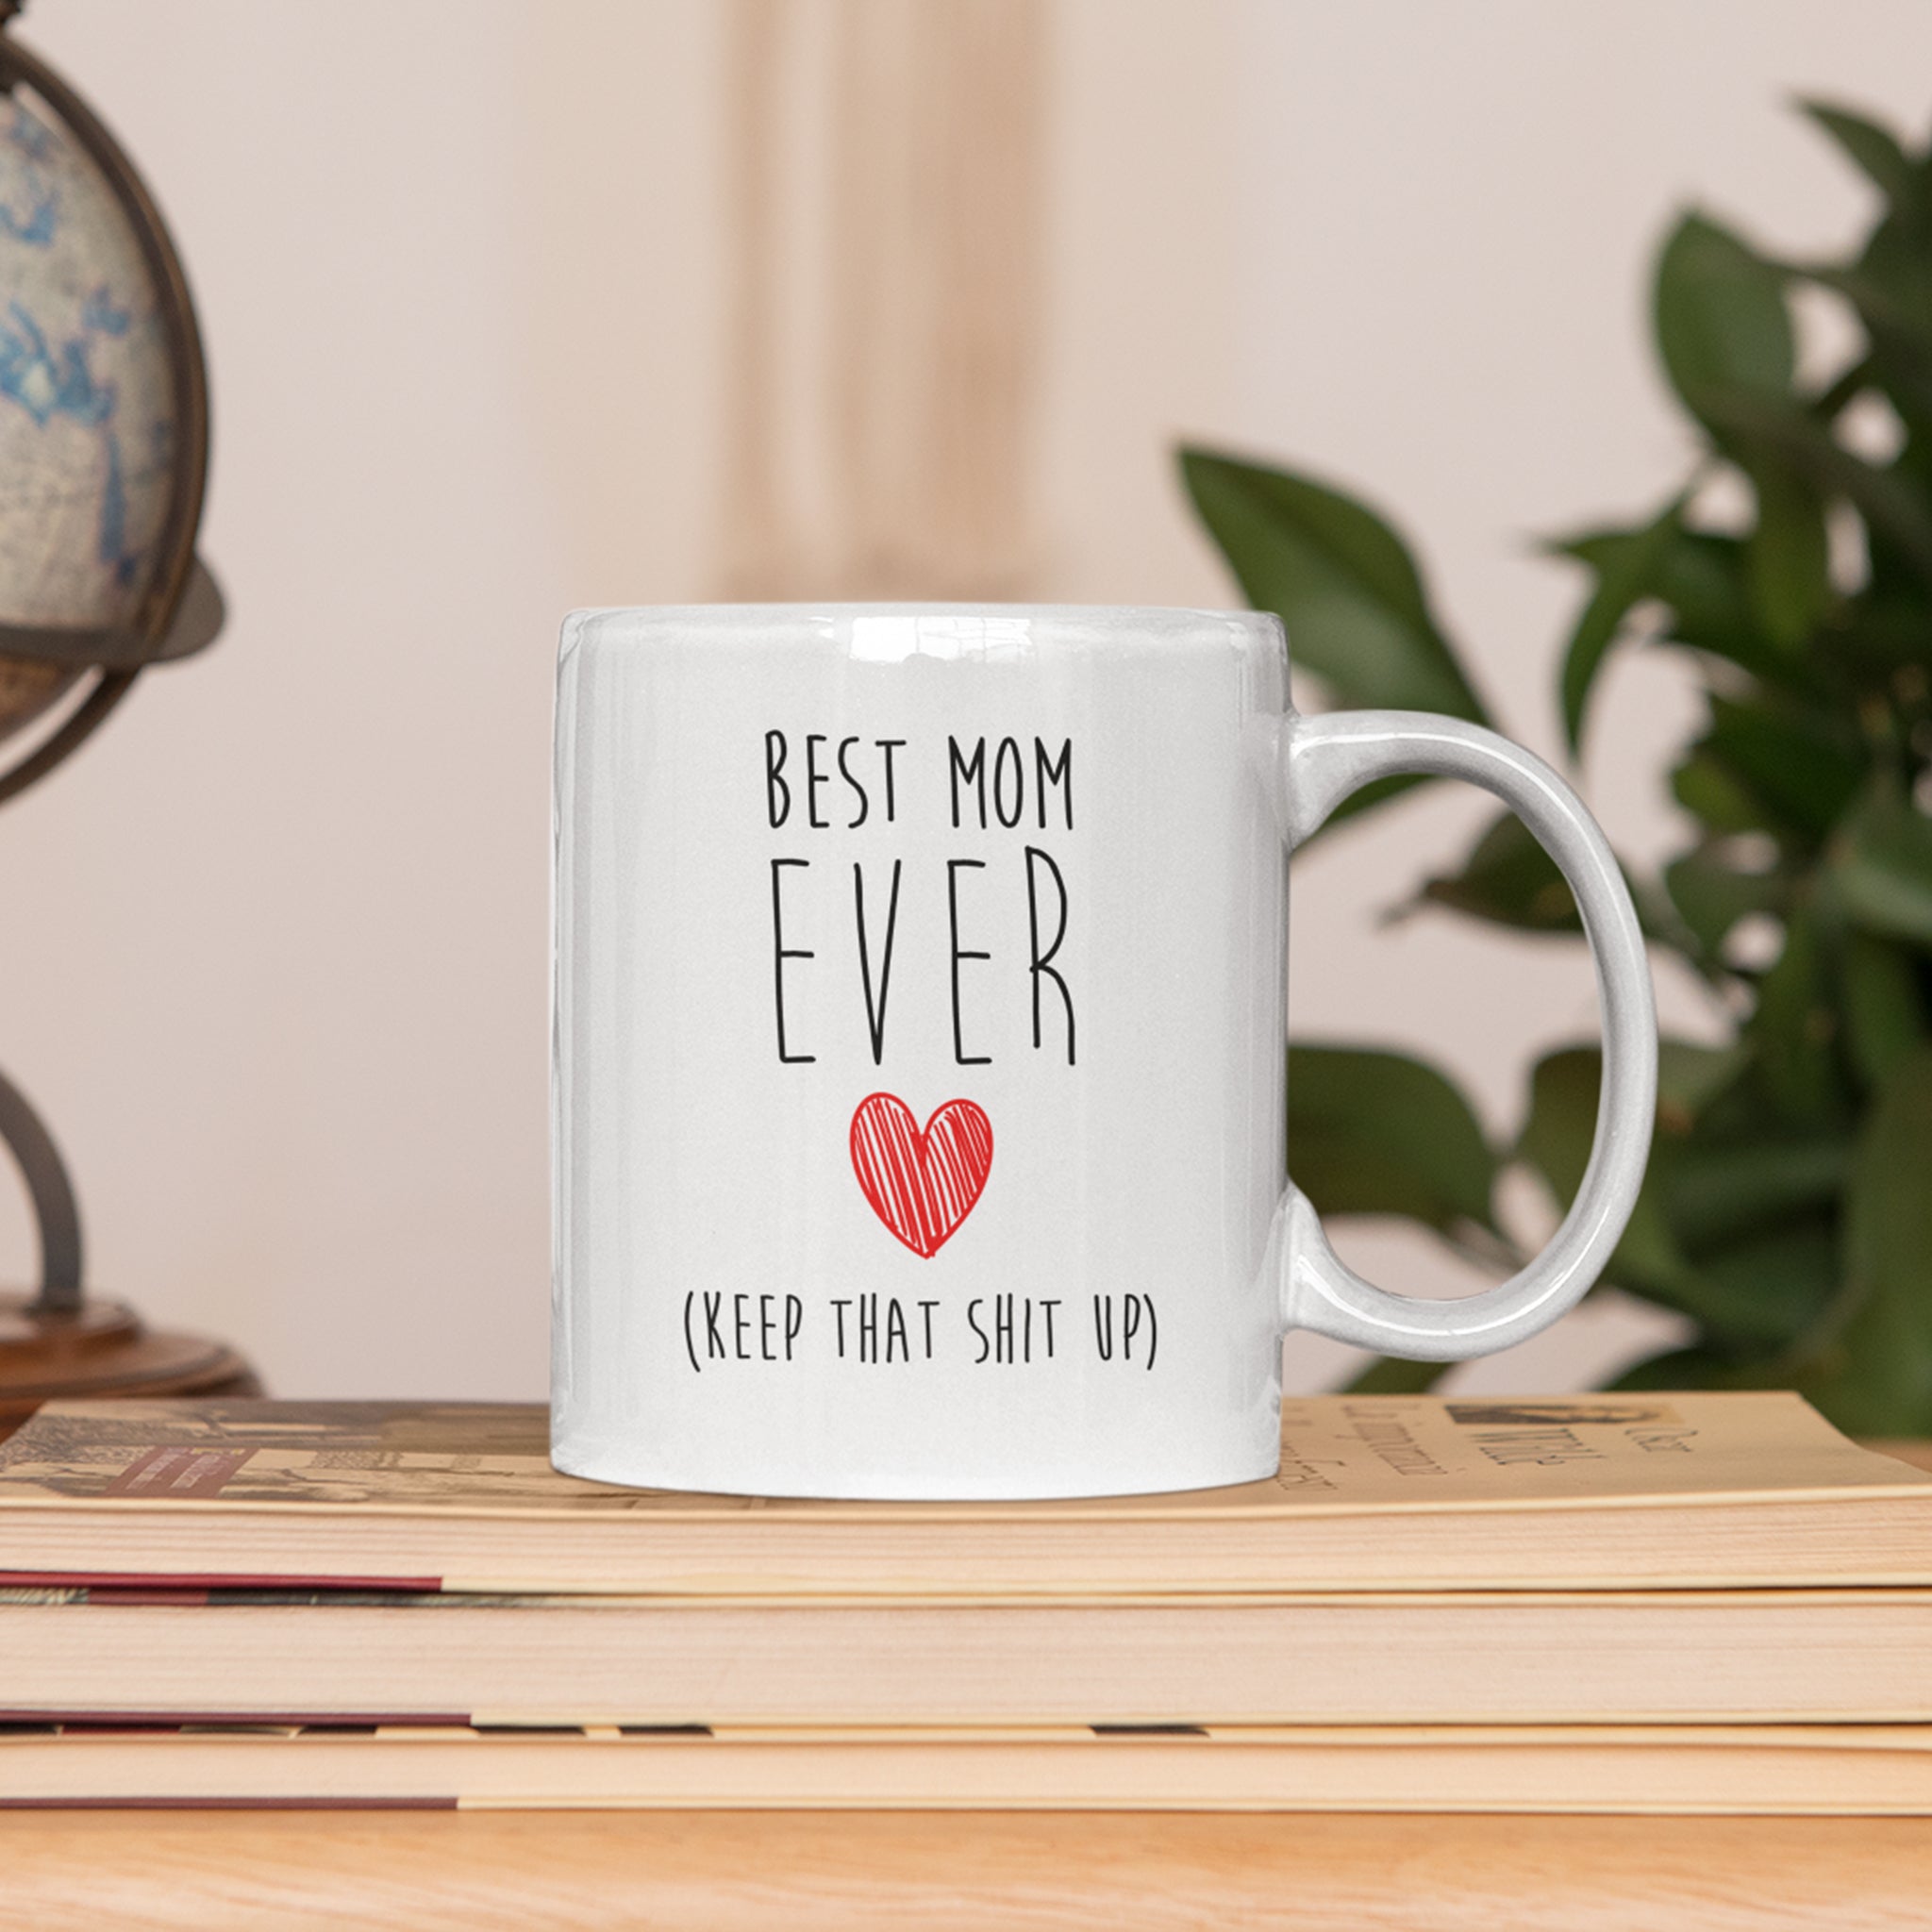 Best Mom Ever - Funny Mother's Day Mug